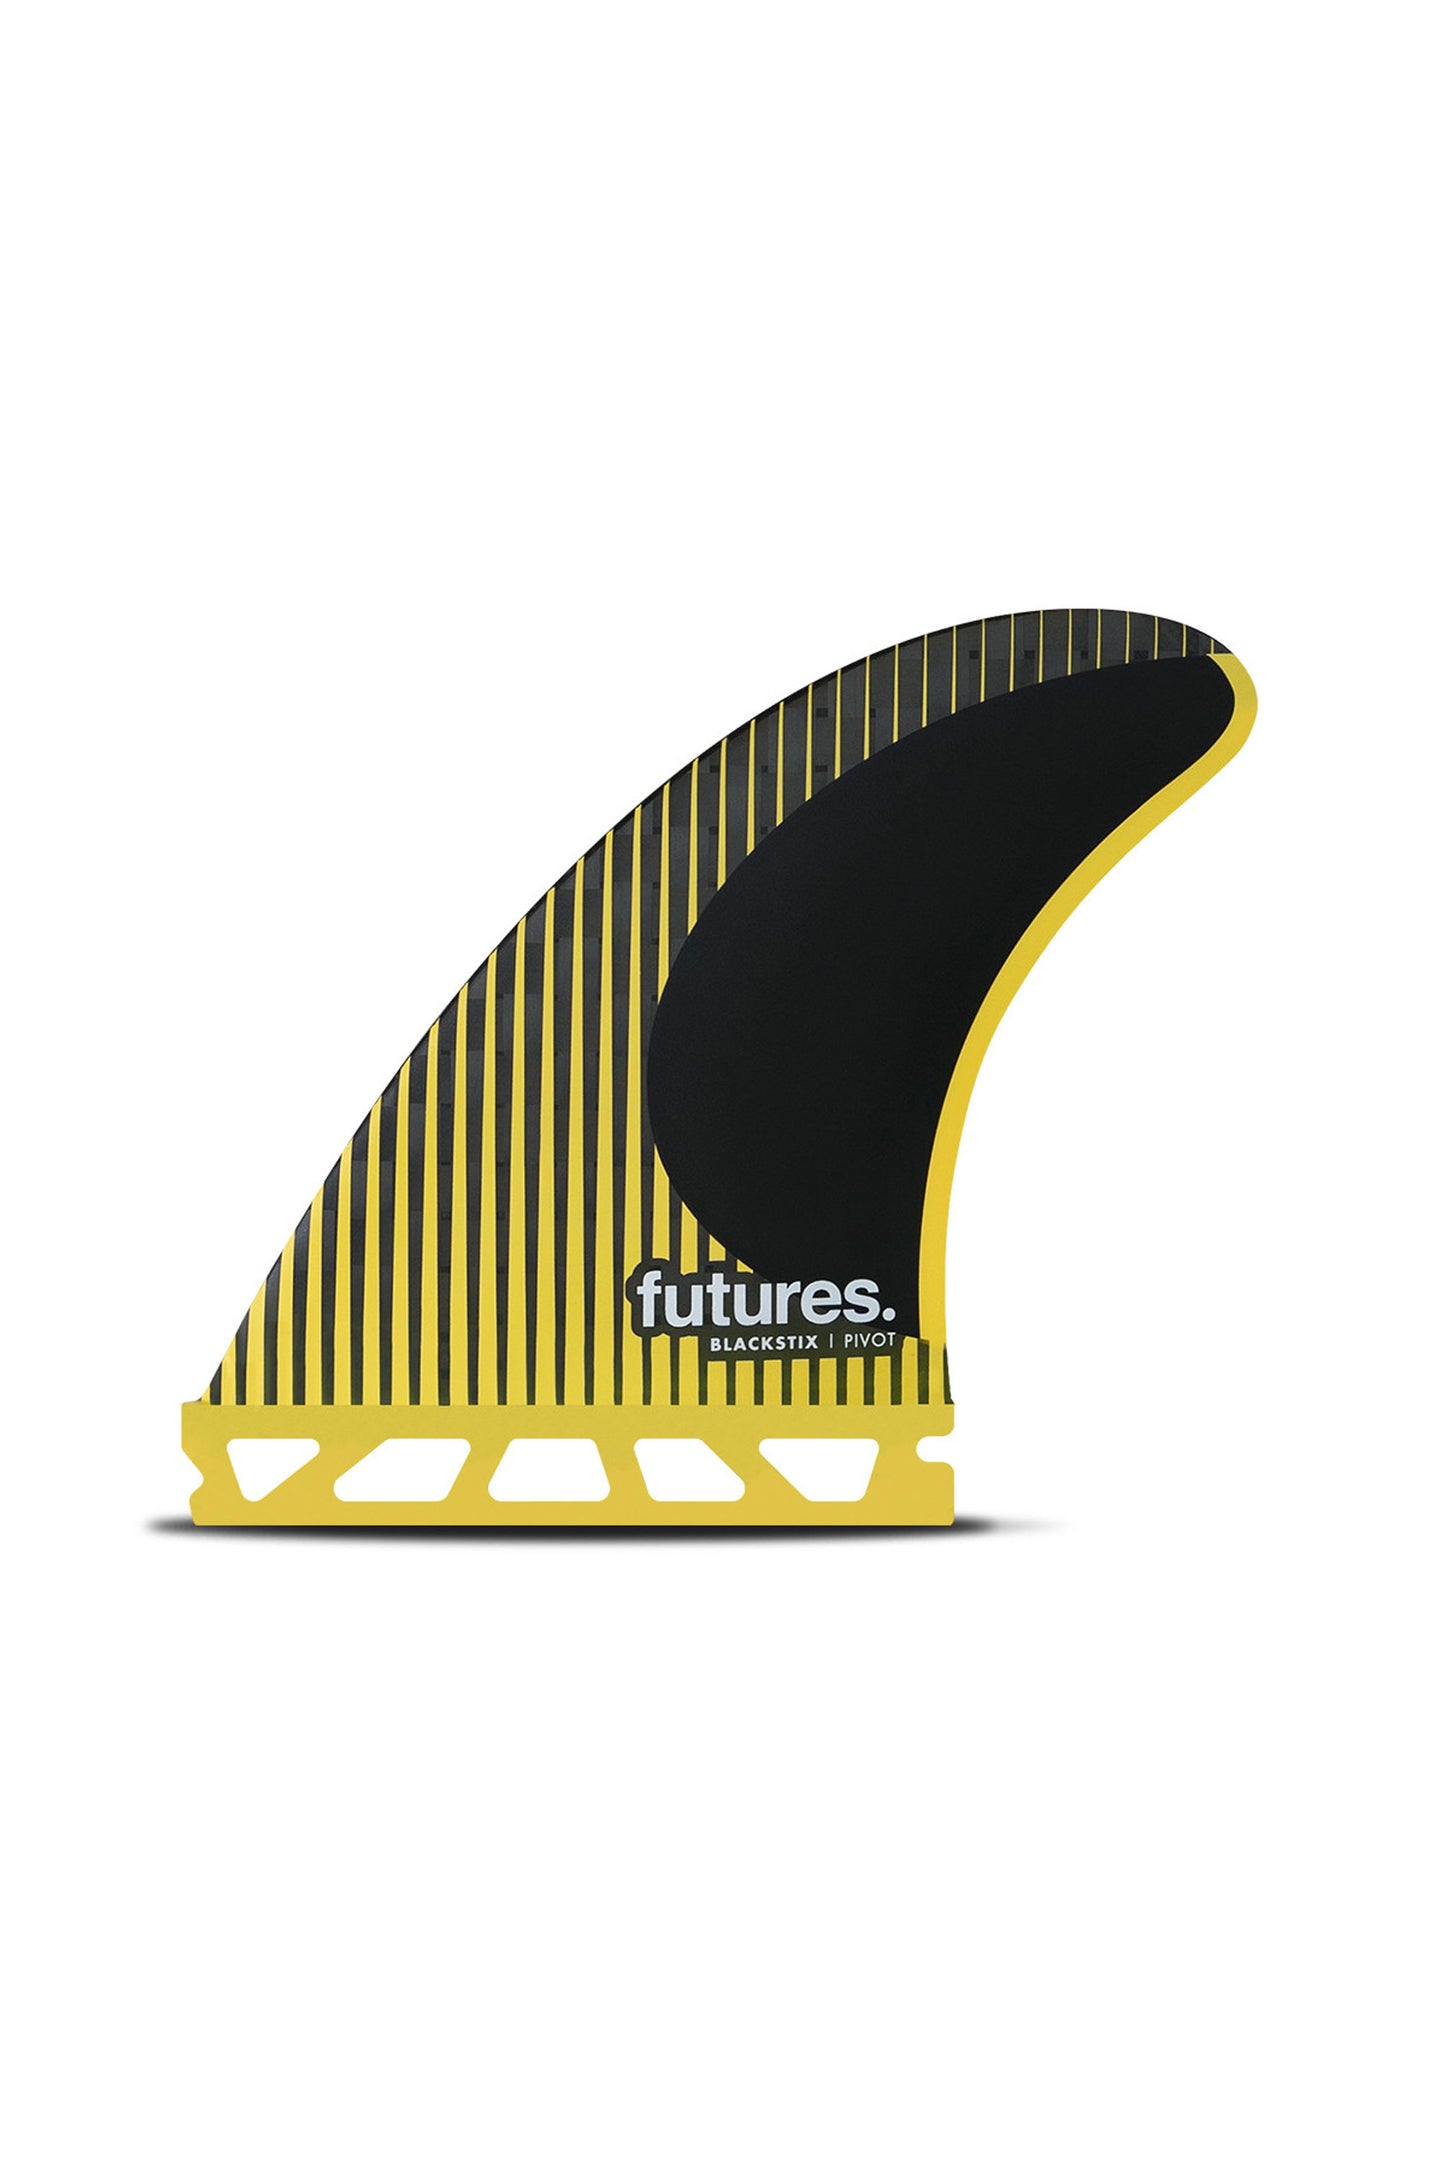 Pukas-Surf-Shop-Futures-Fins-P6-Blackstix-3-fins